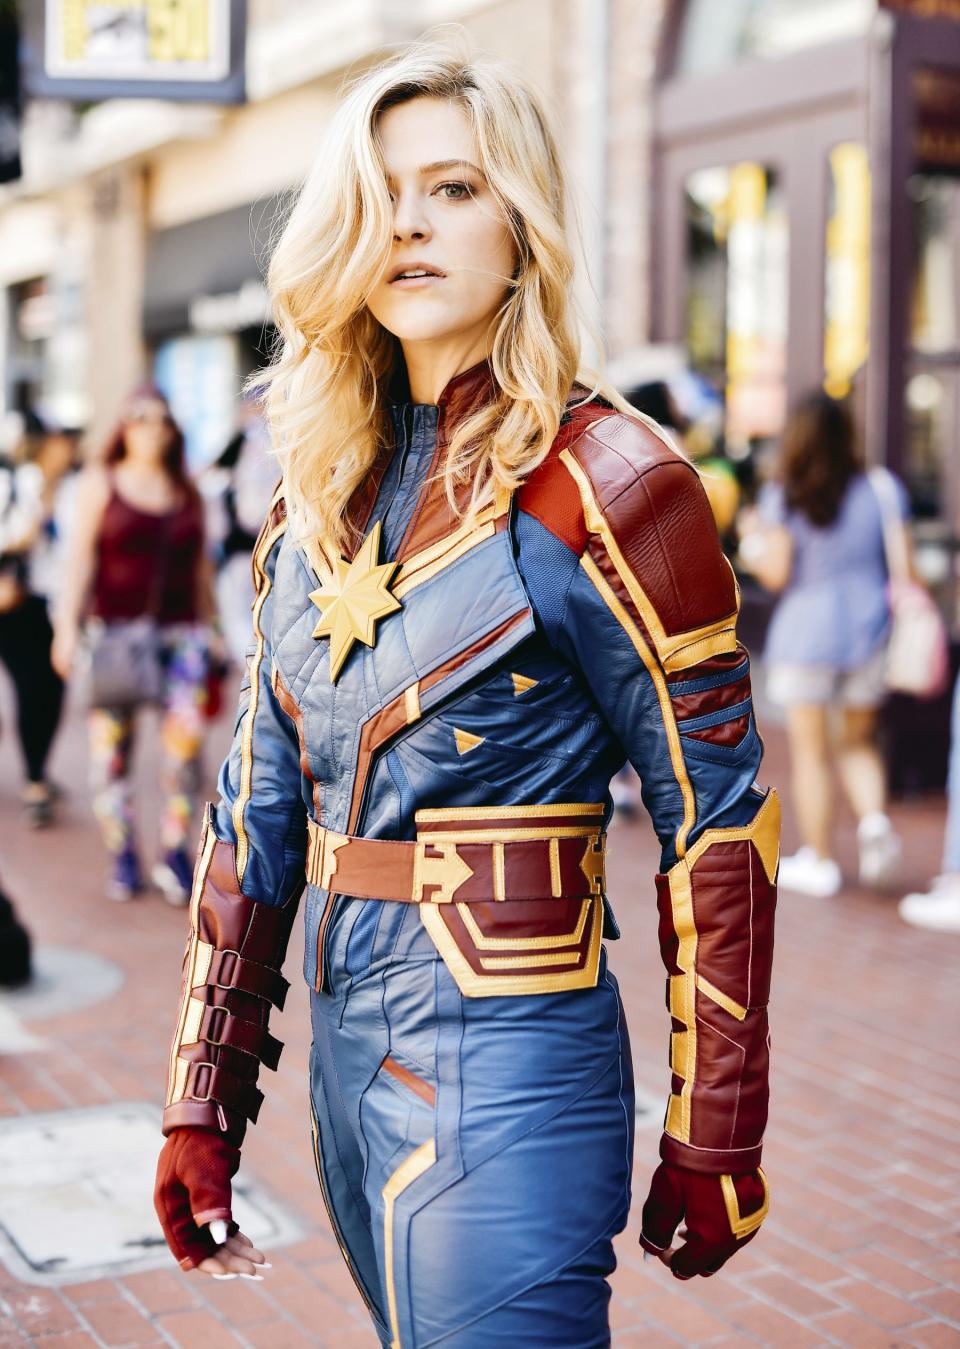 Captain Marvel cosplayer